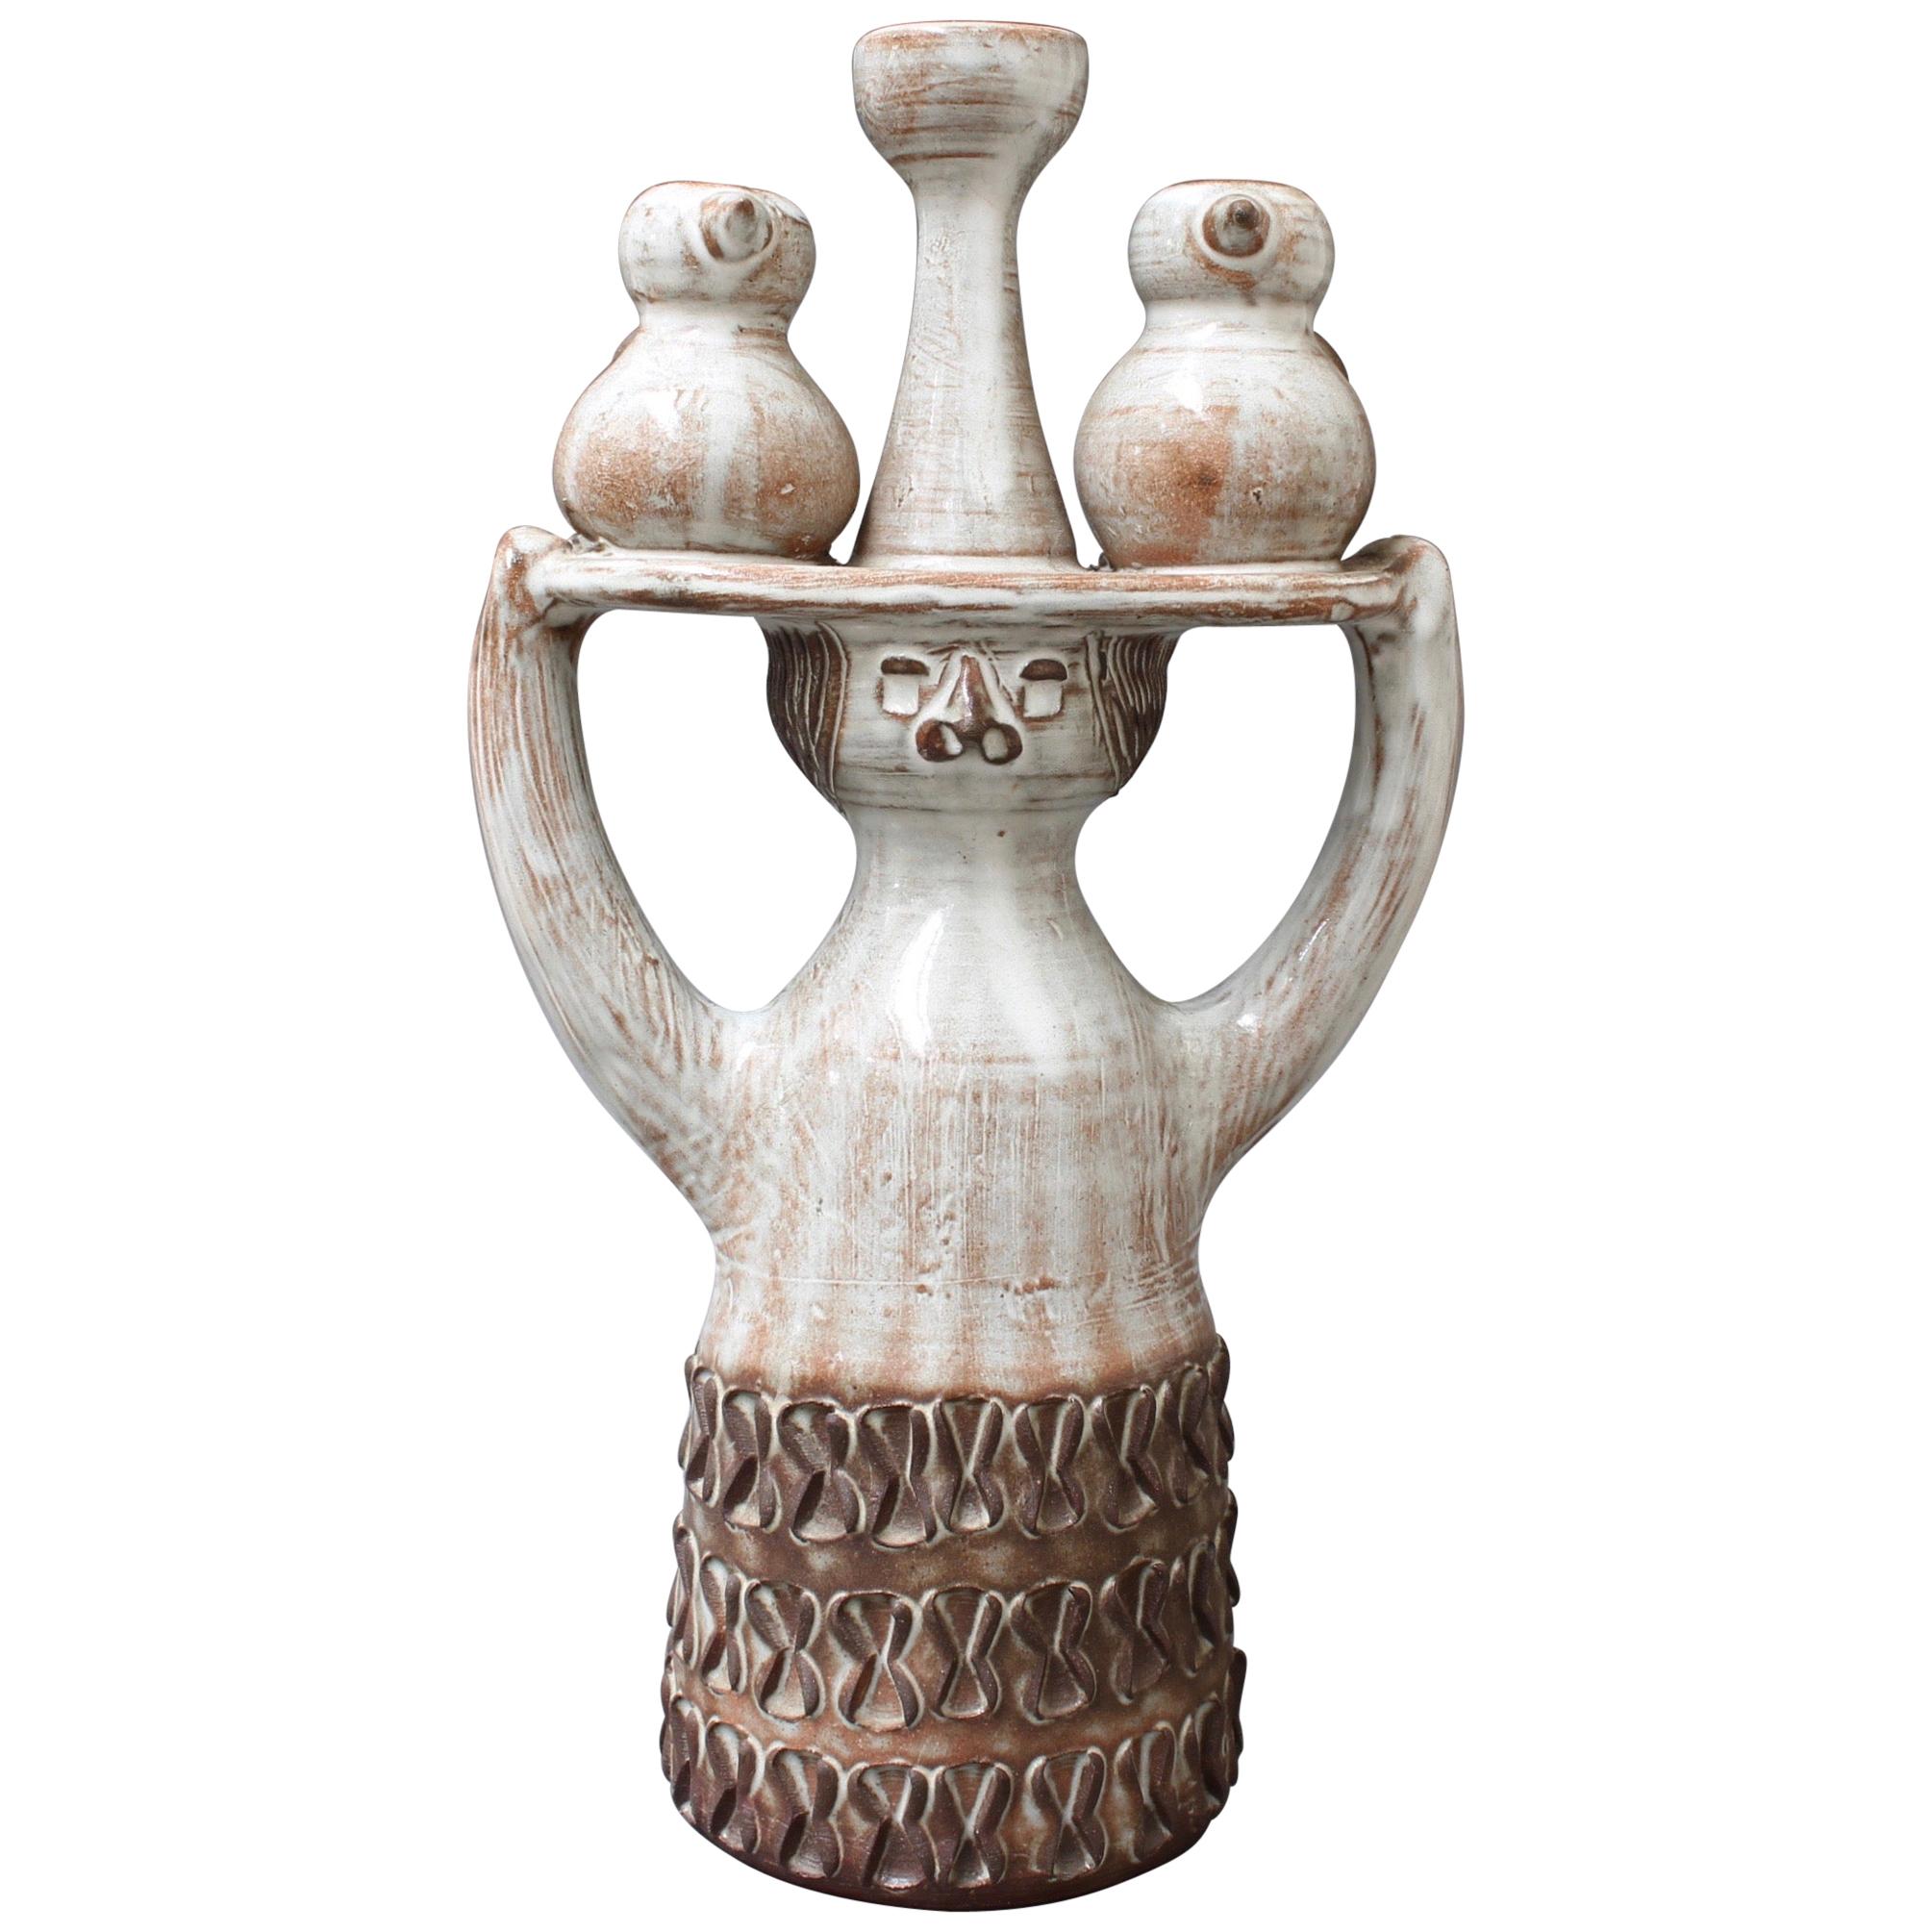 Glazed Ceramic Pottery Carrier by Jacques Pouchain / Atelier Dieulefit